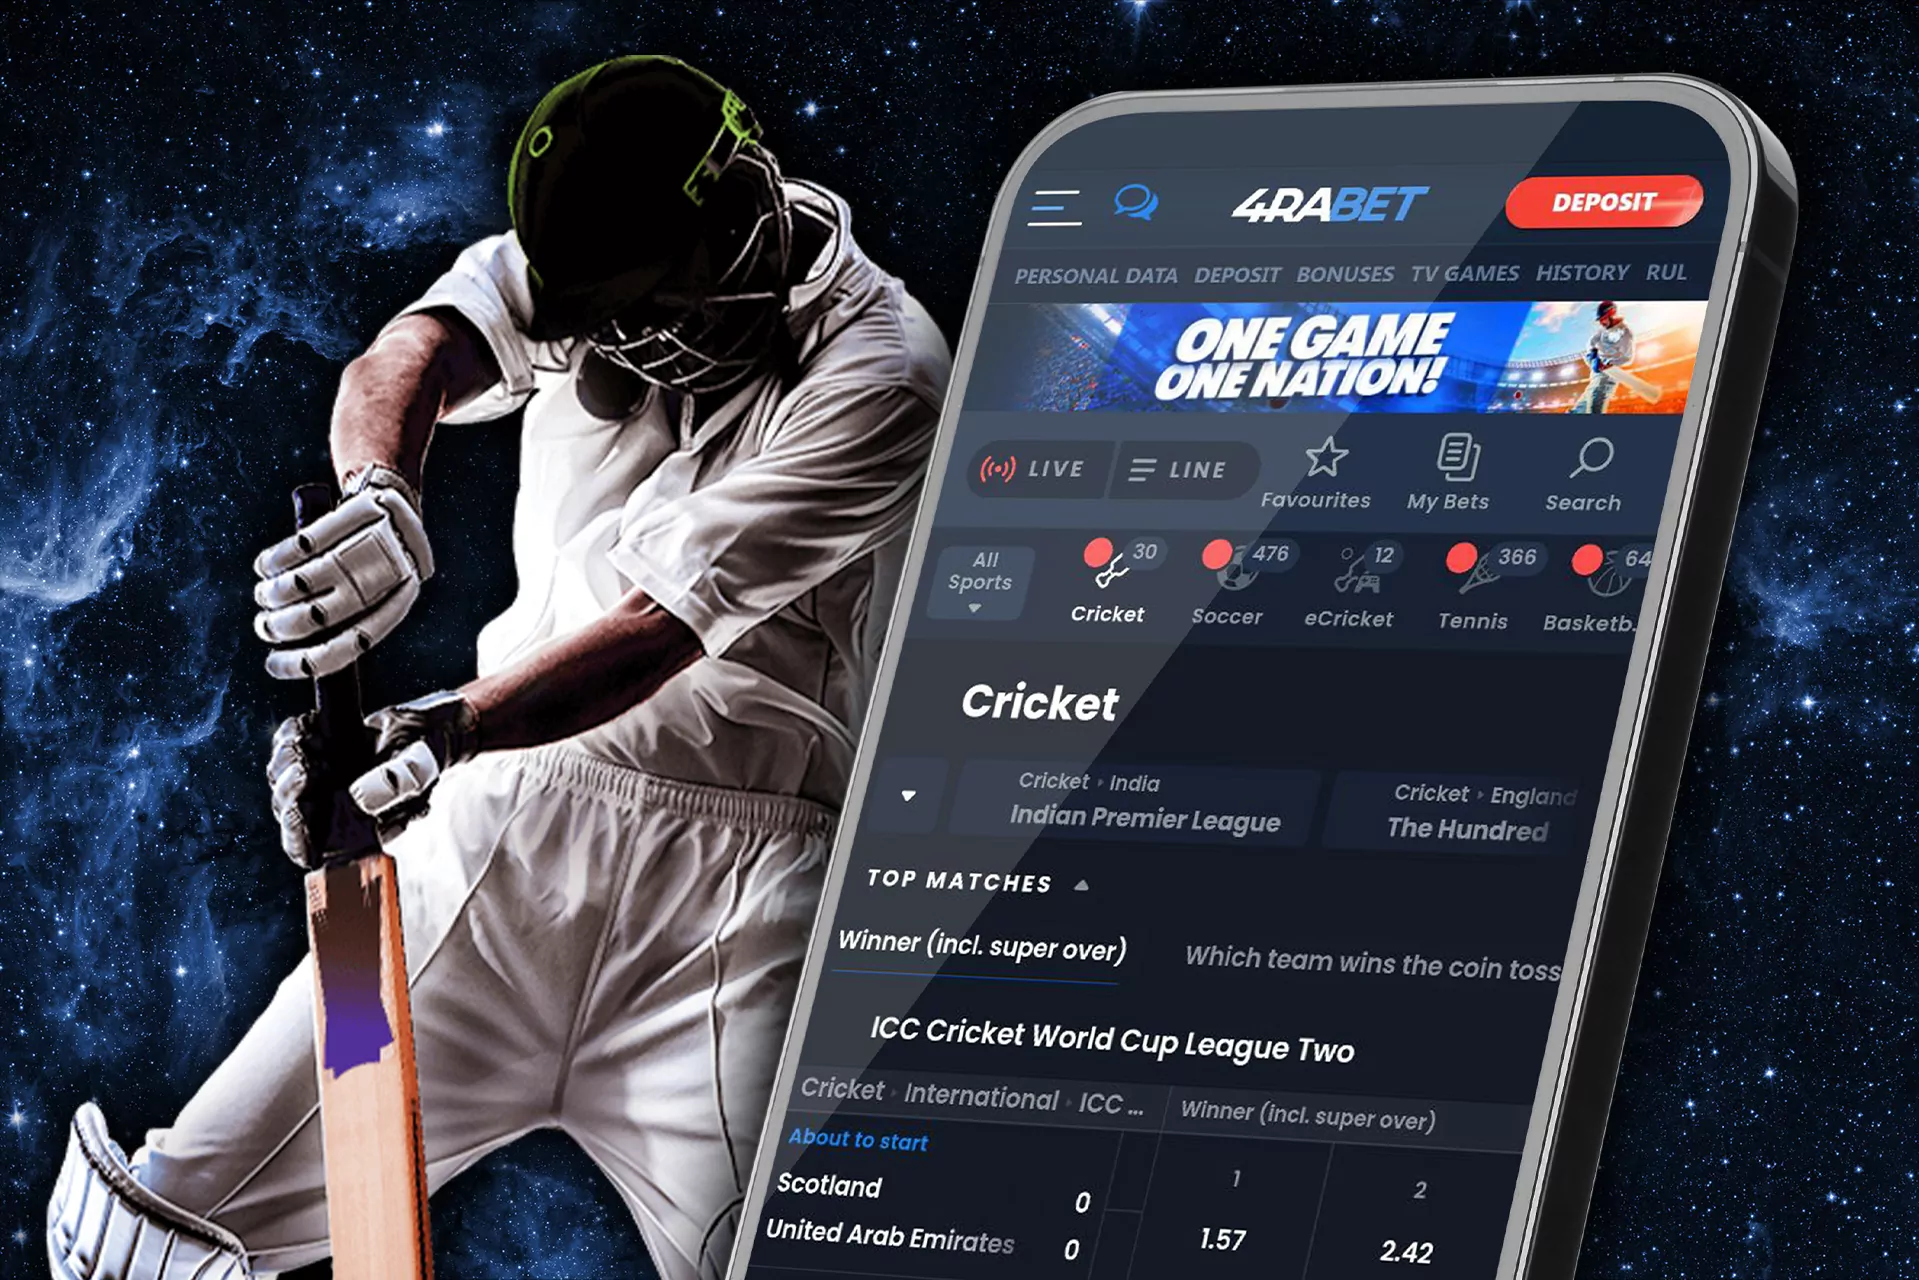 Bet on cricket in the 4rabet app.